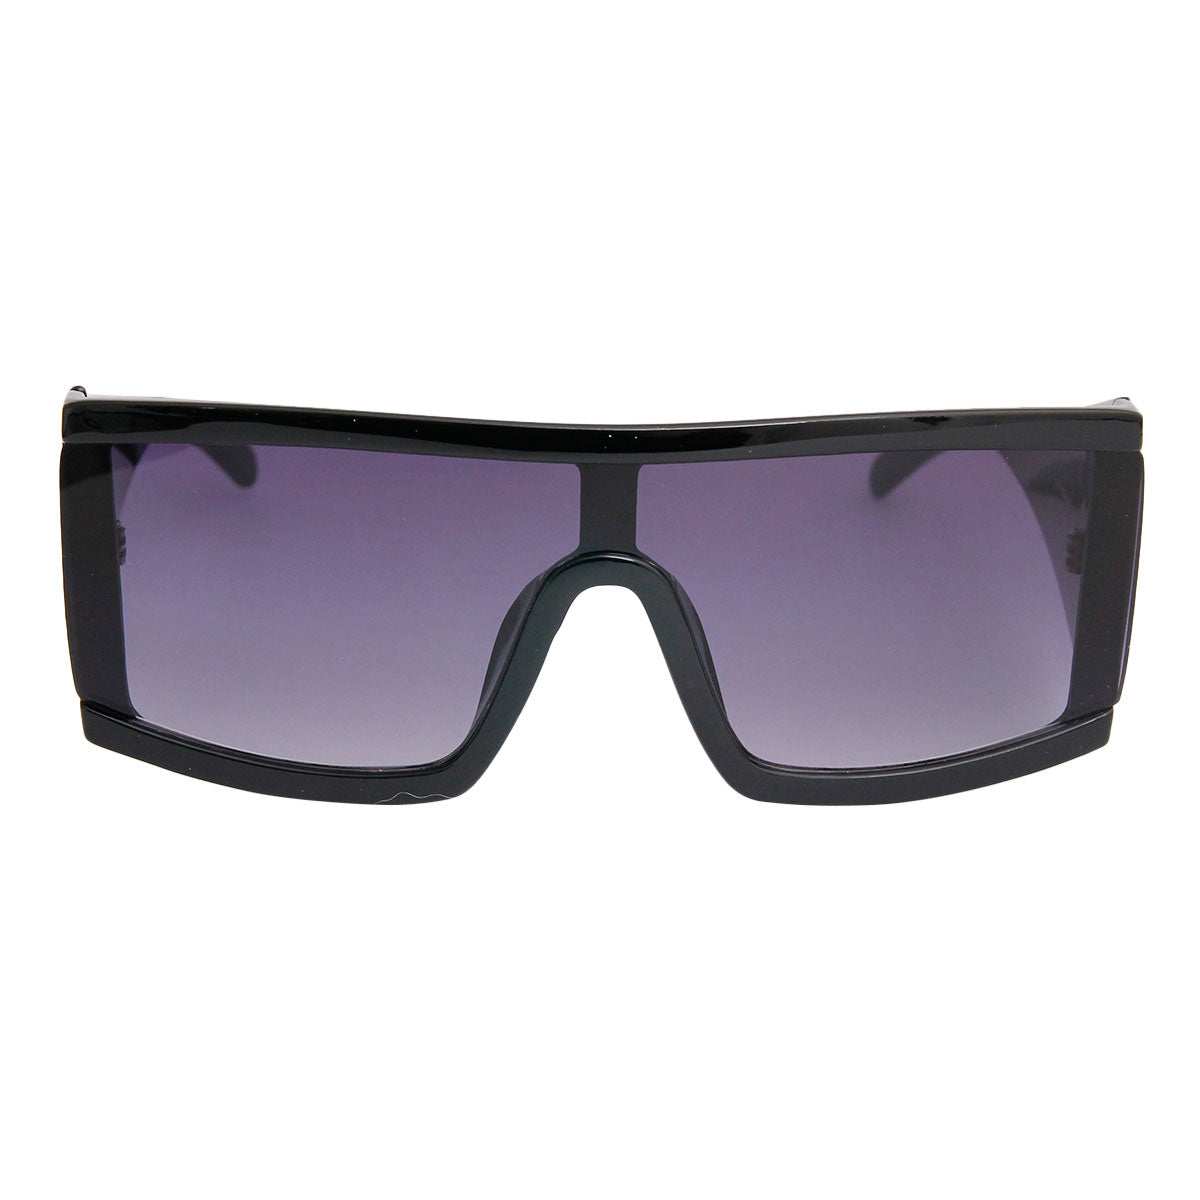 Inspired Celine Black Square Sunglasses at Fancy5Fashion.com